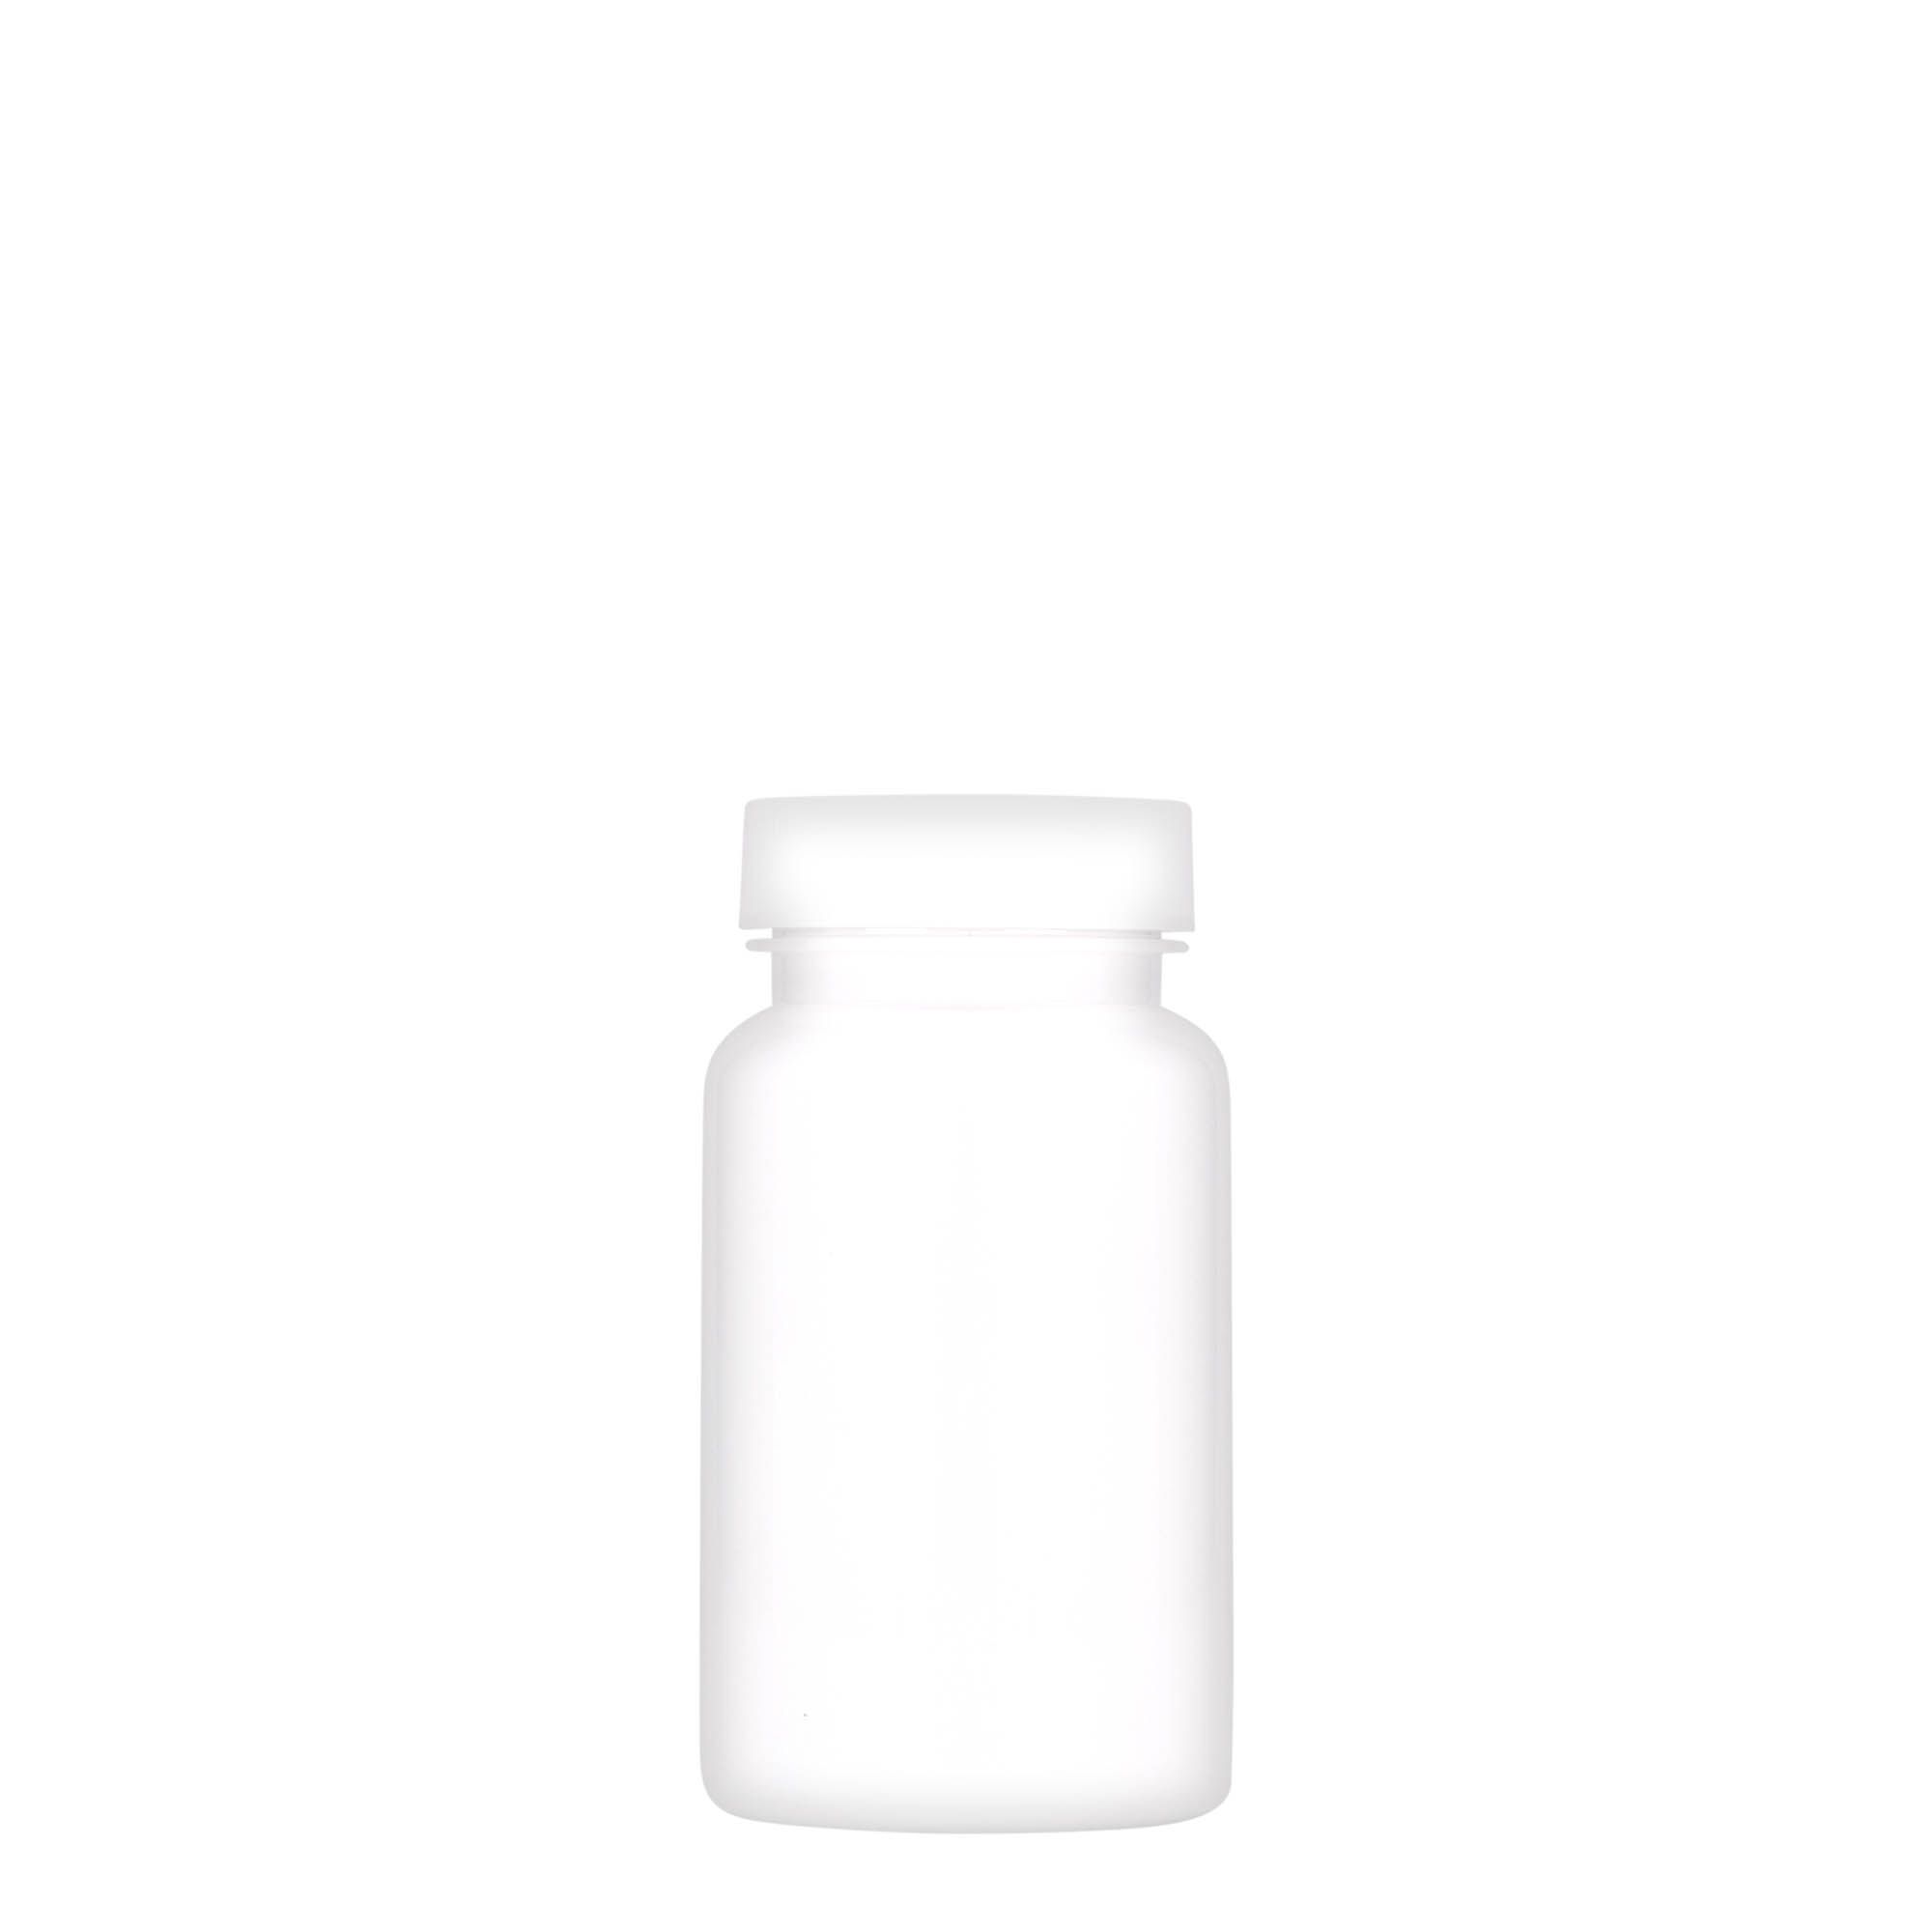 PET dóza 100 ml, plast, bílá, uzávěr: GPI 38/400